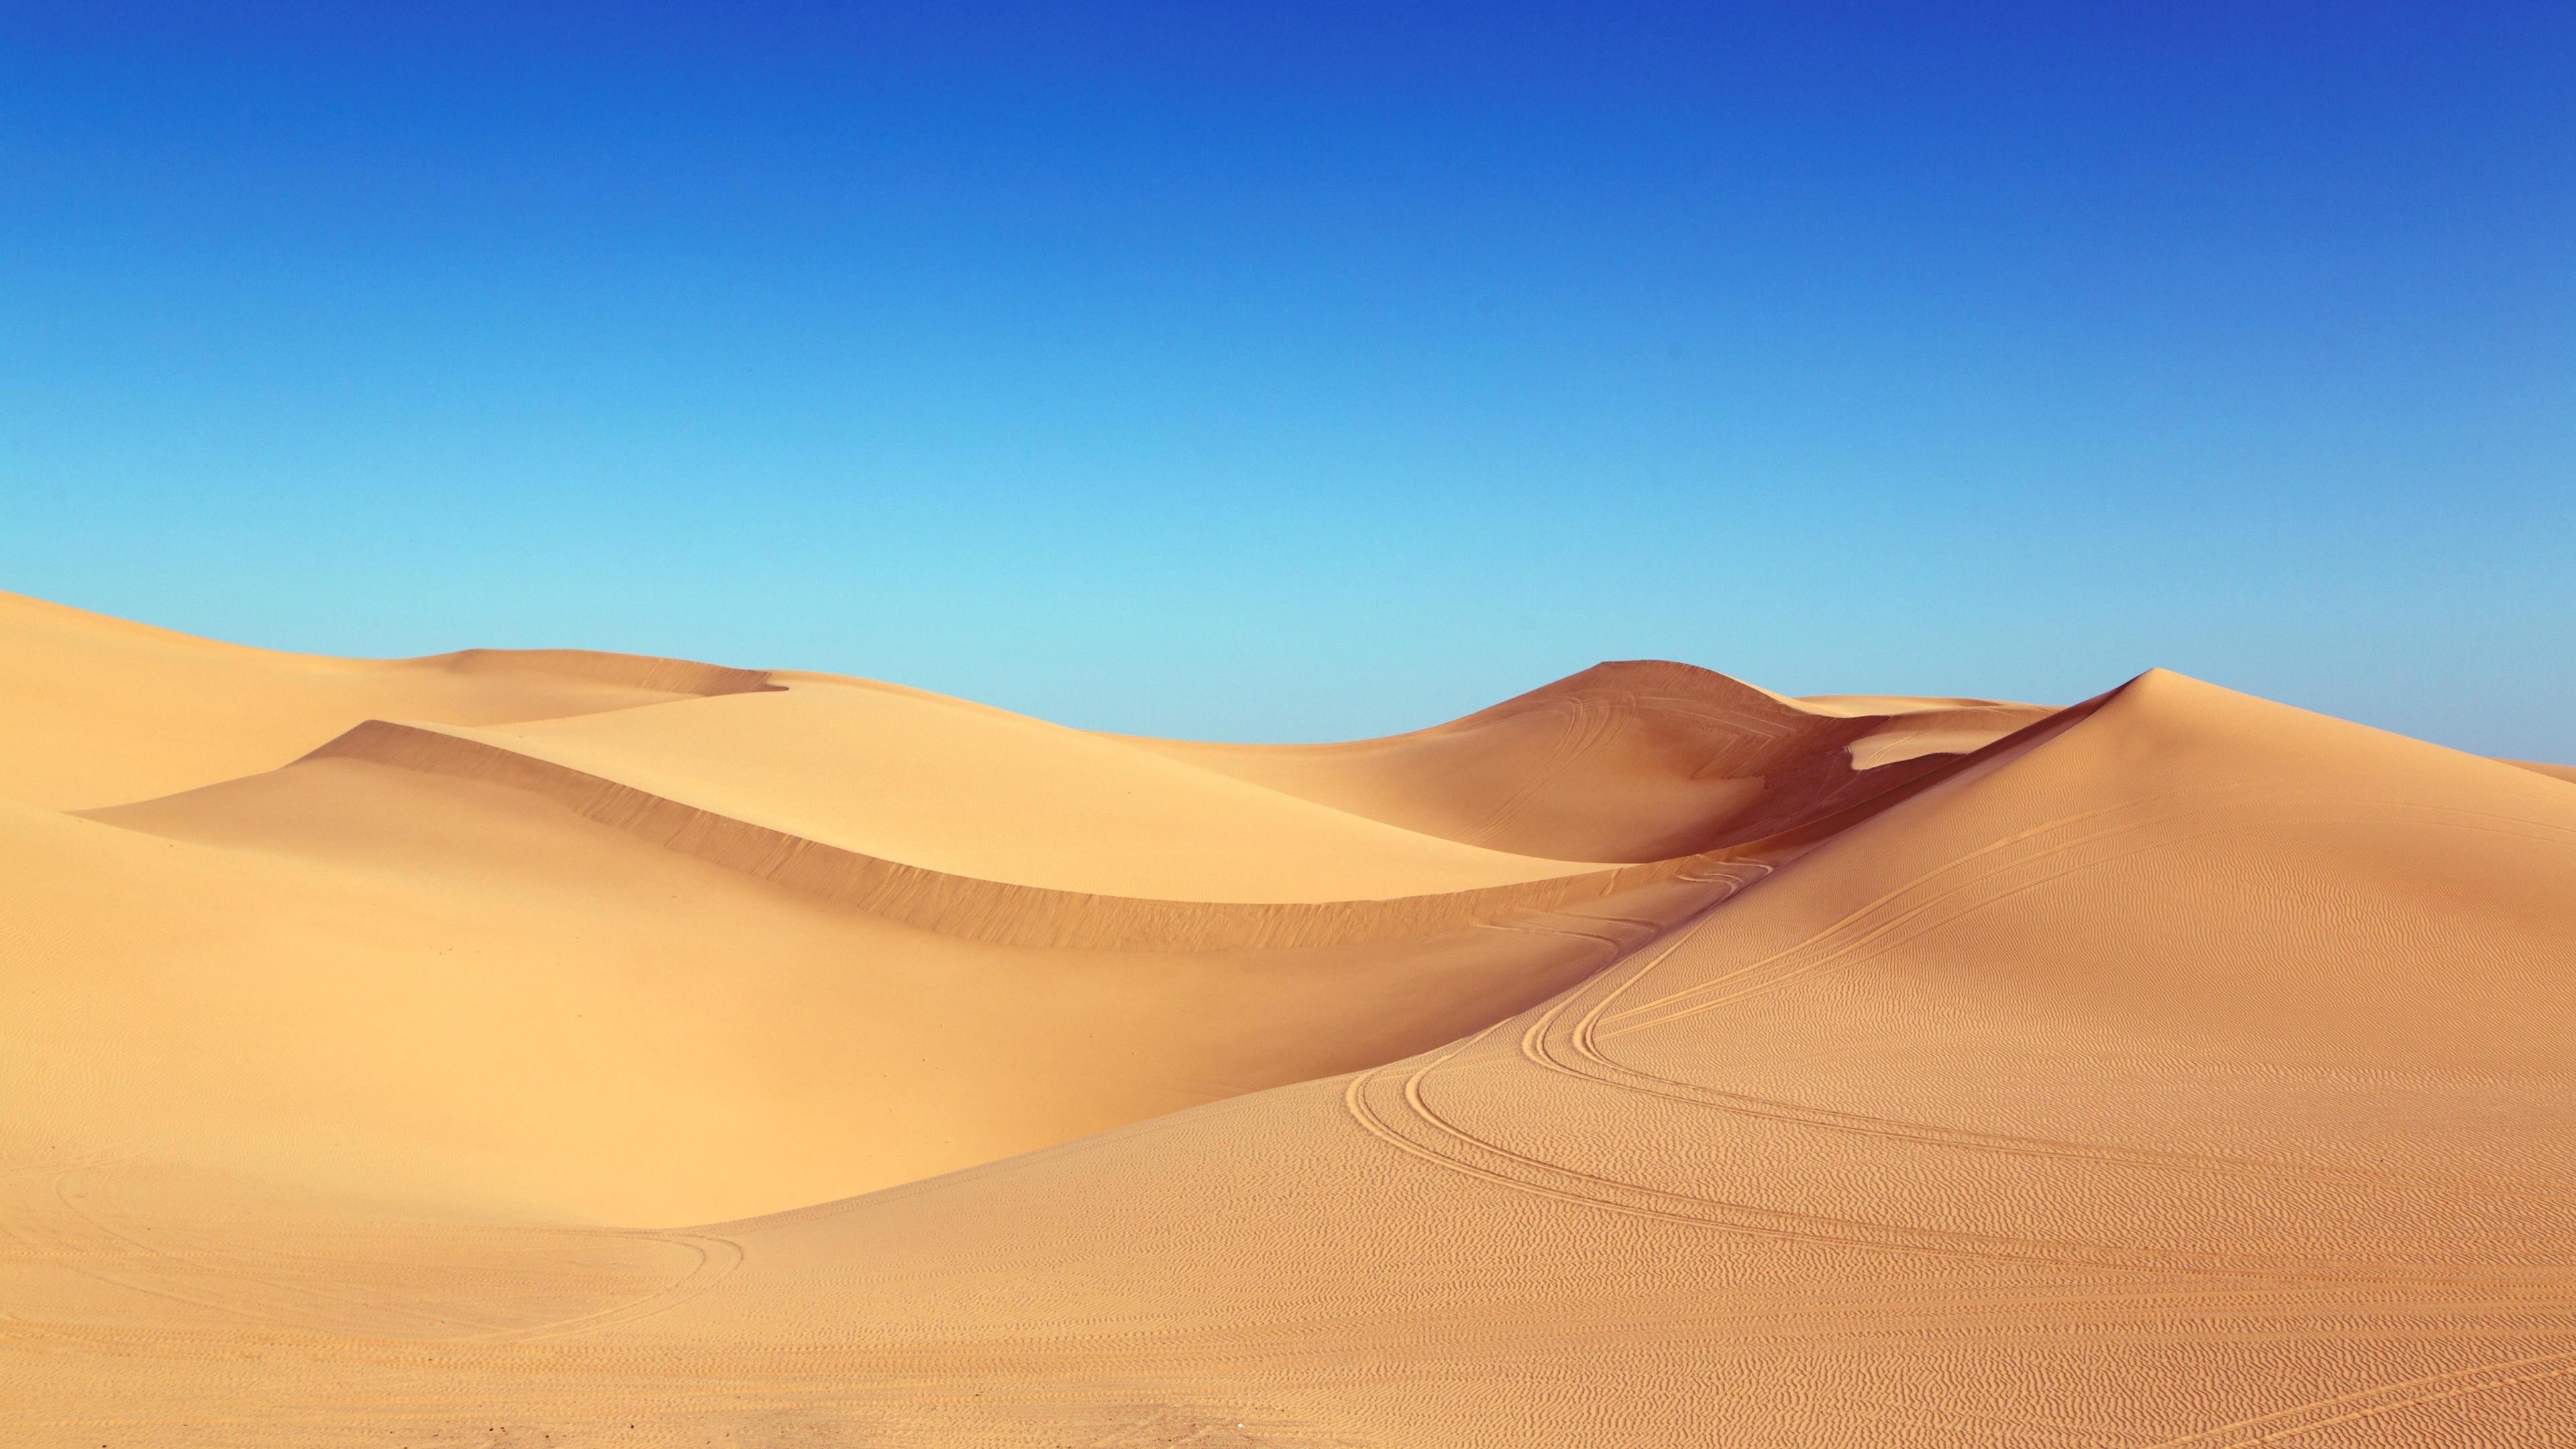 Blue sky and desert dunes wallpaper 3840x2160